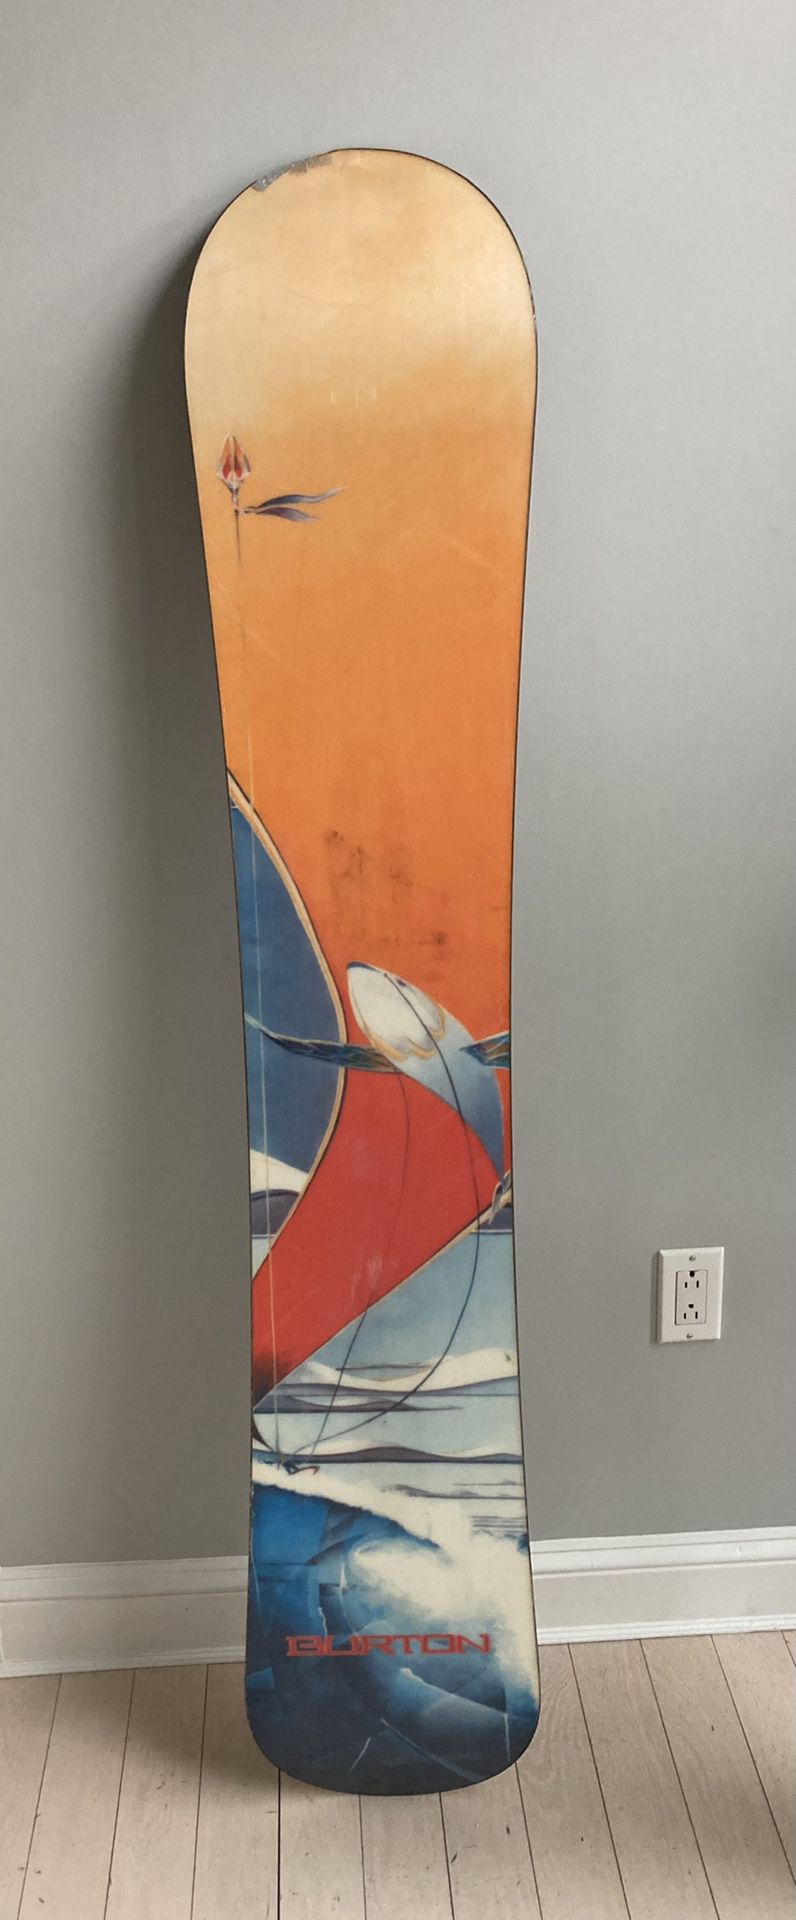 Burton 157cm Snowboard without Bindings